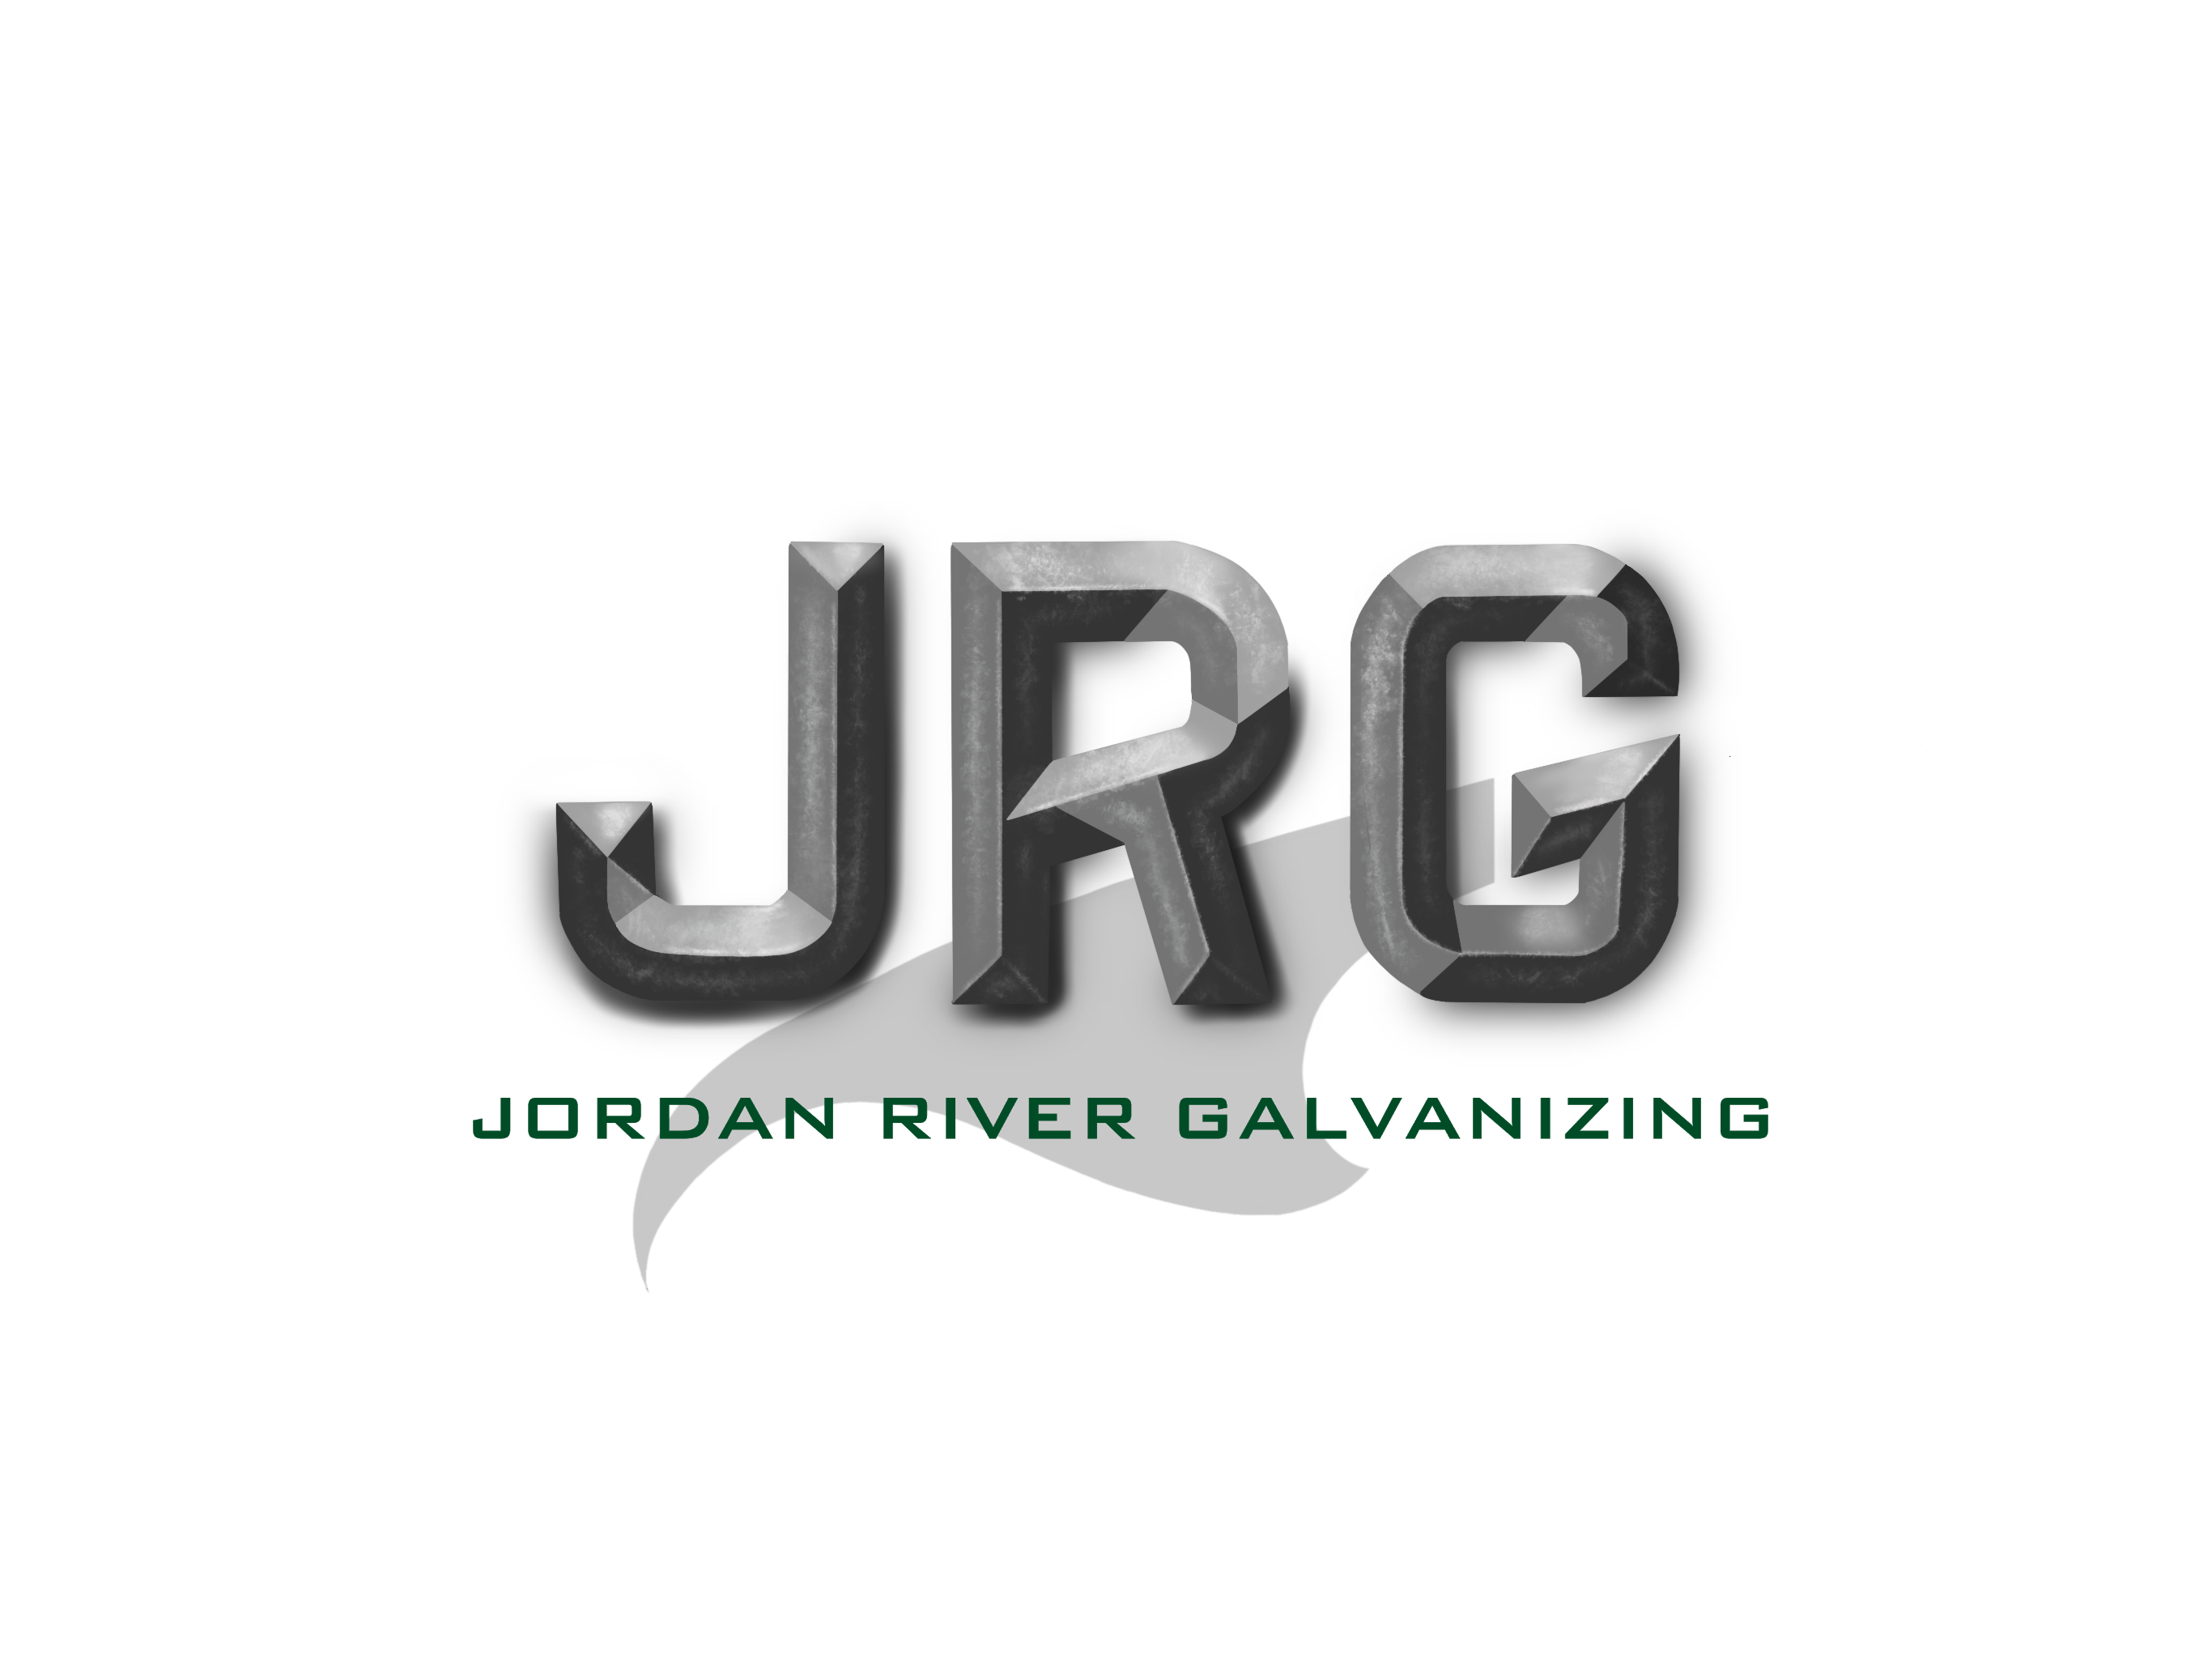 Jordan River Galvanizing